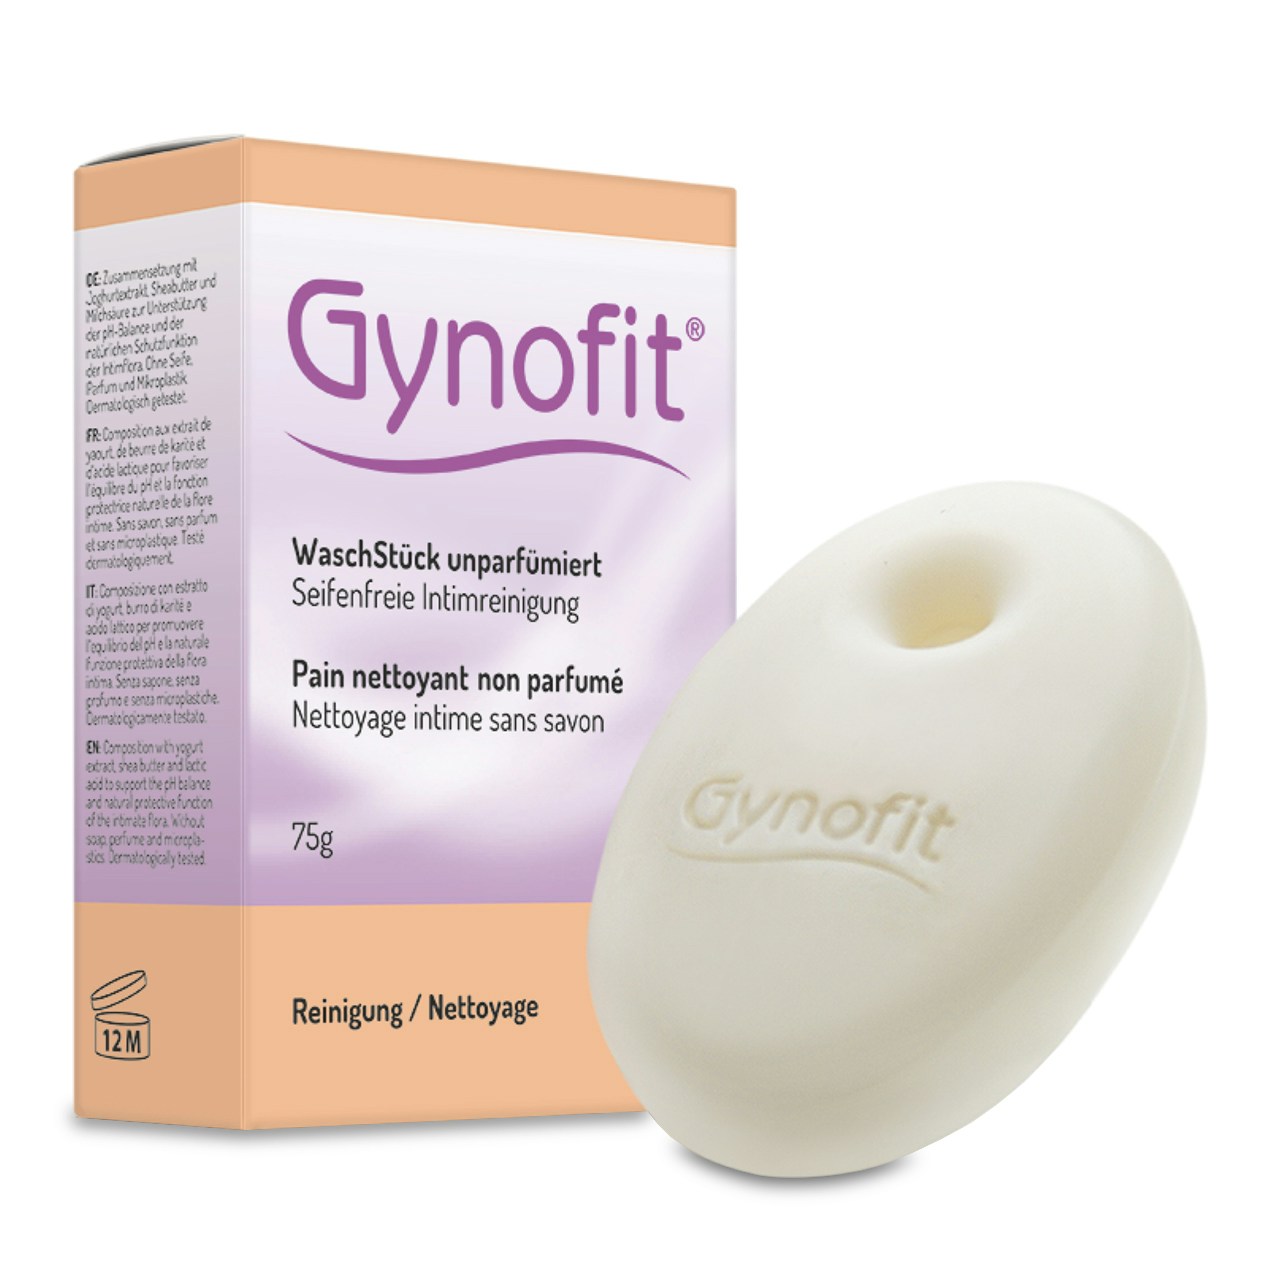 Gynofit WaschStück unparfümiert